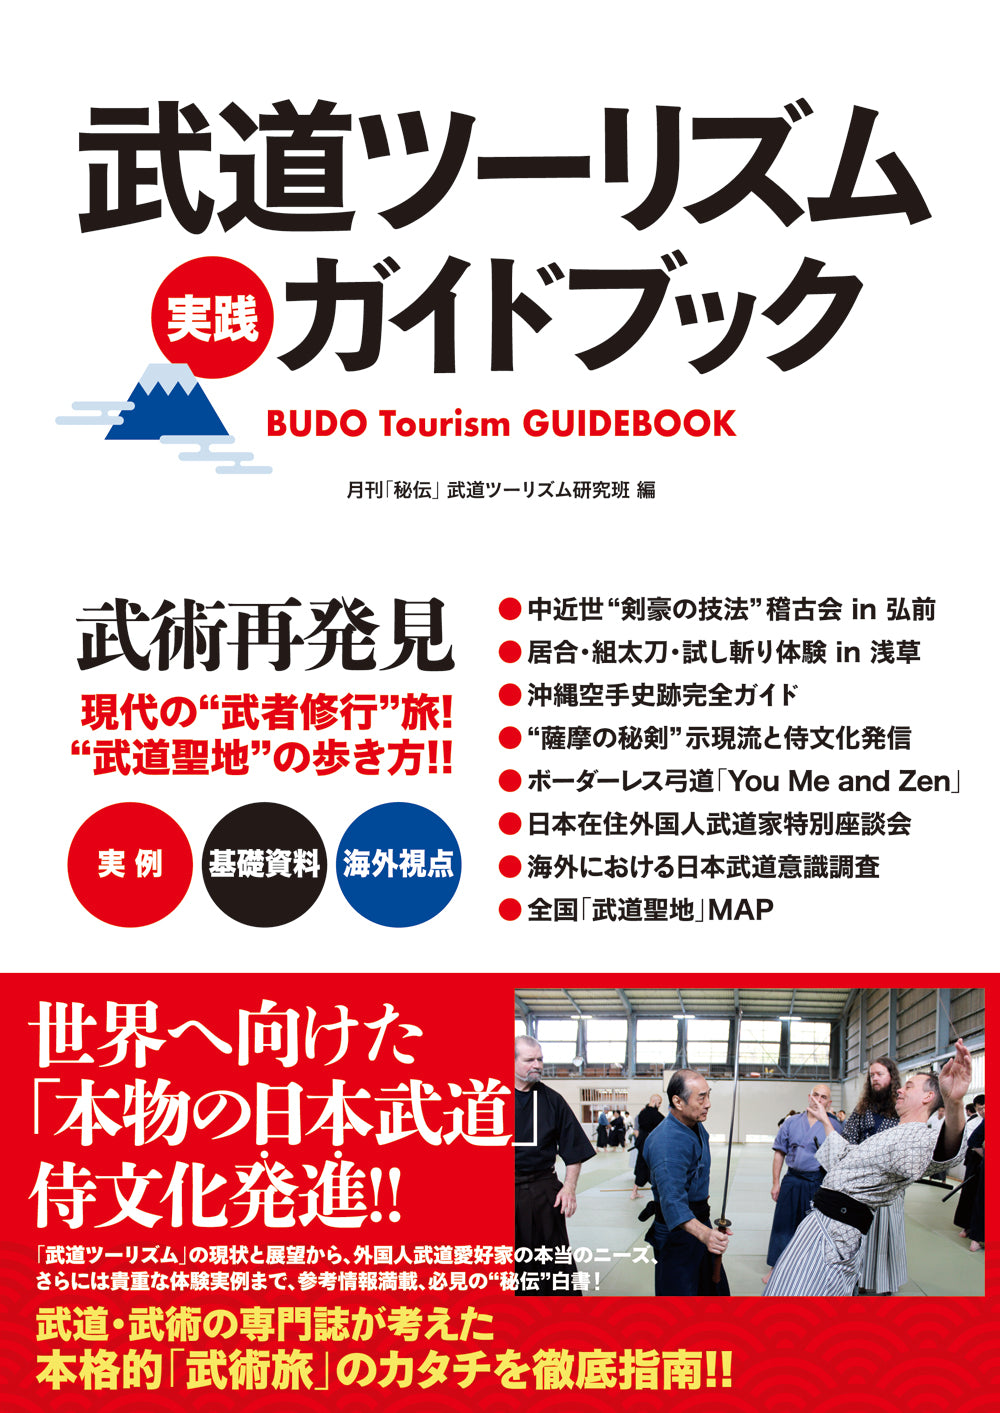 Budo Tourism in Japan Guidebook